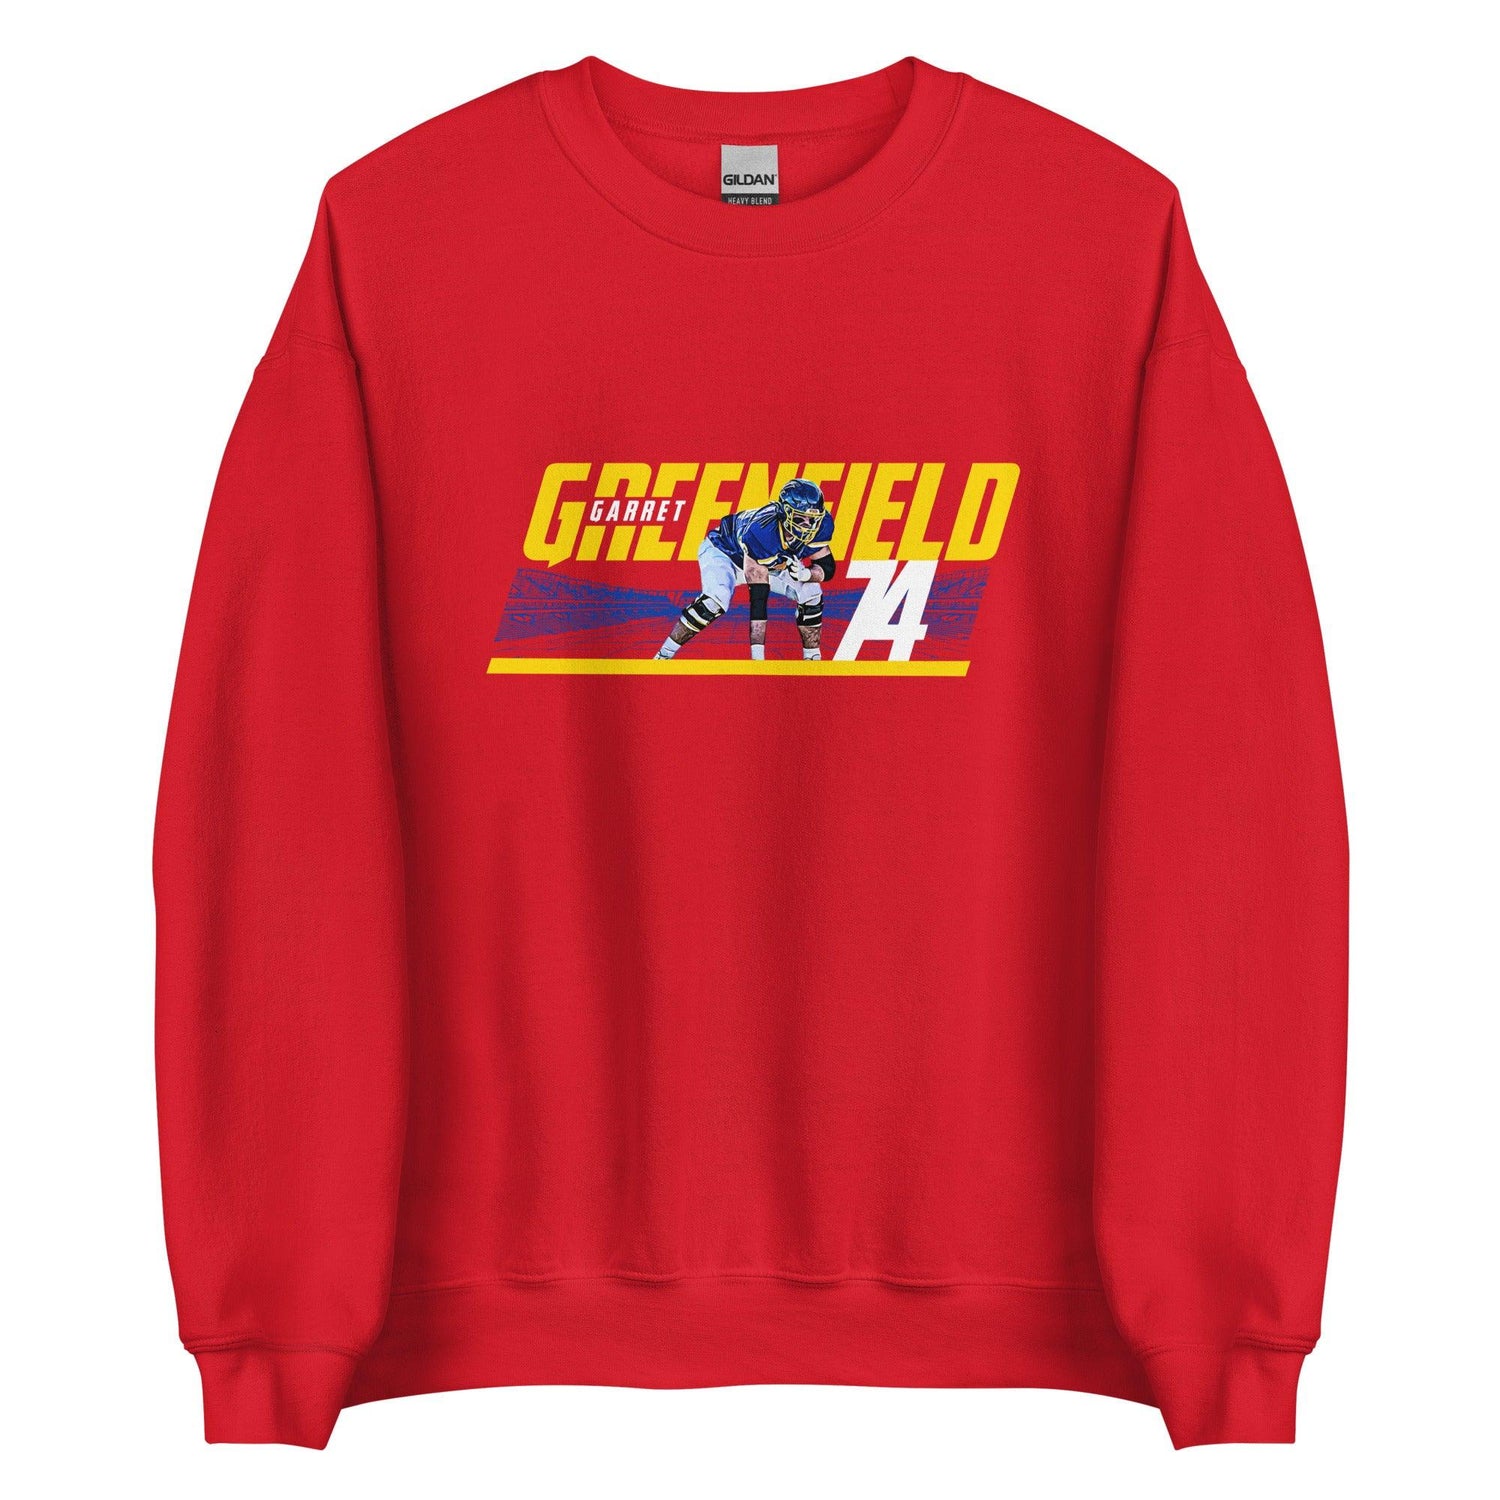 Garret Greenfield "Gameday" Sweatshirt - Fan Arch